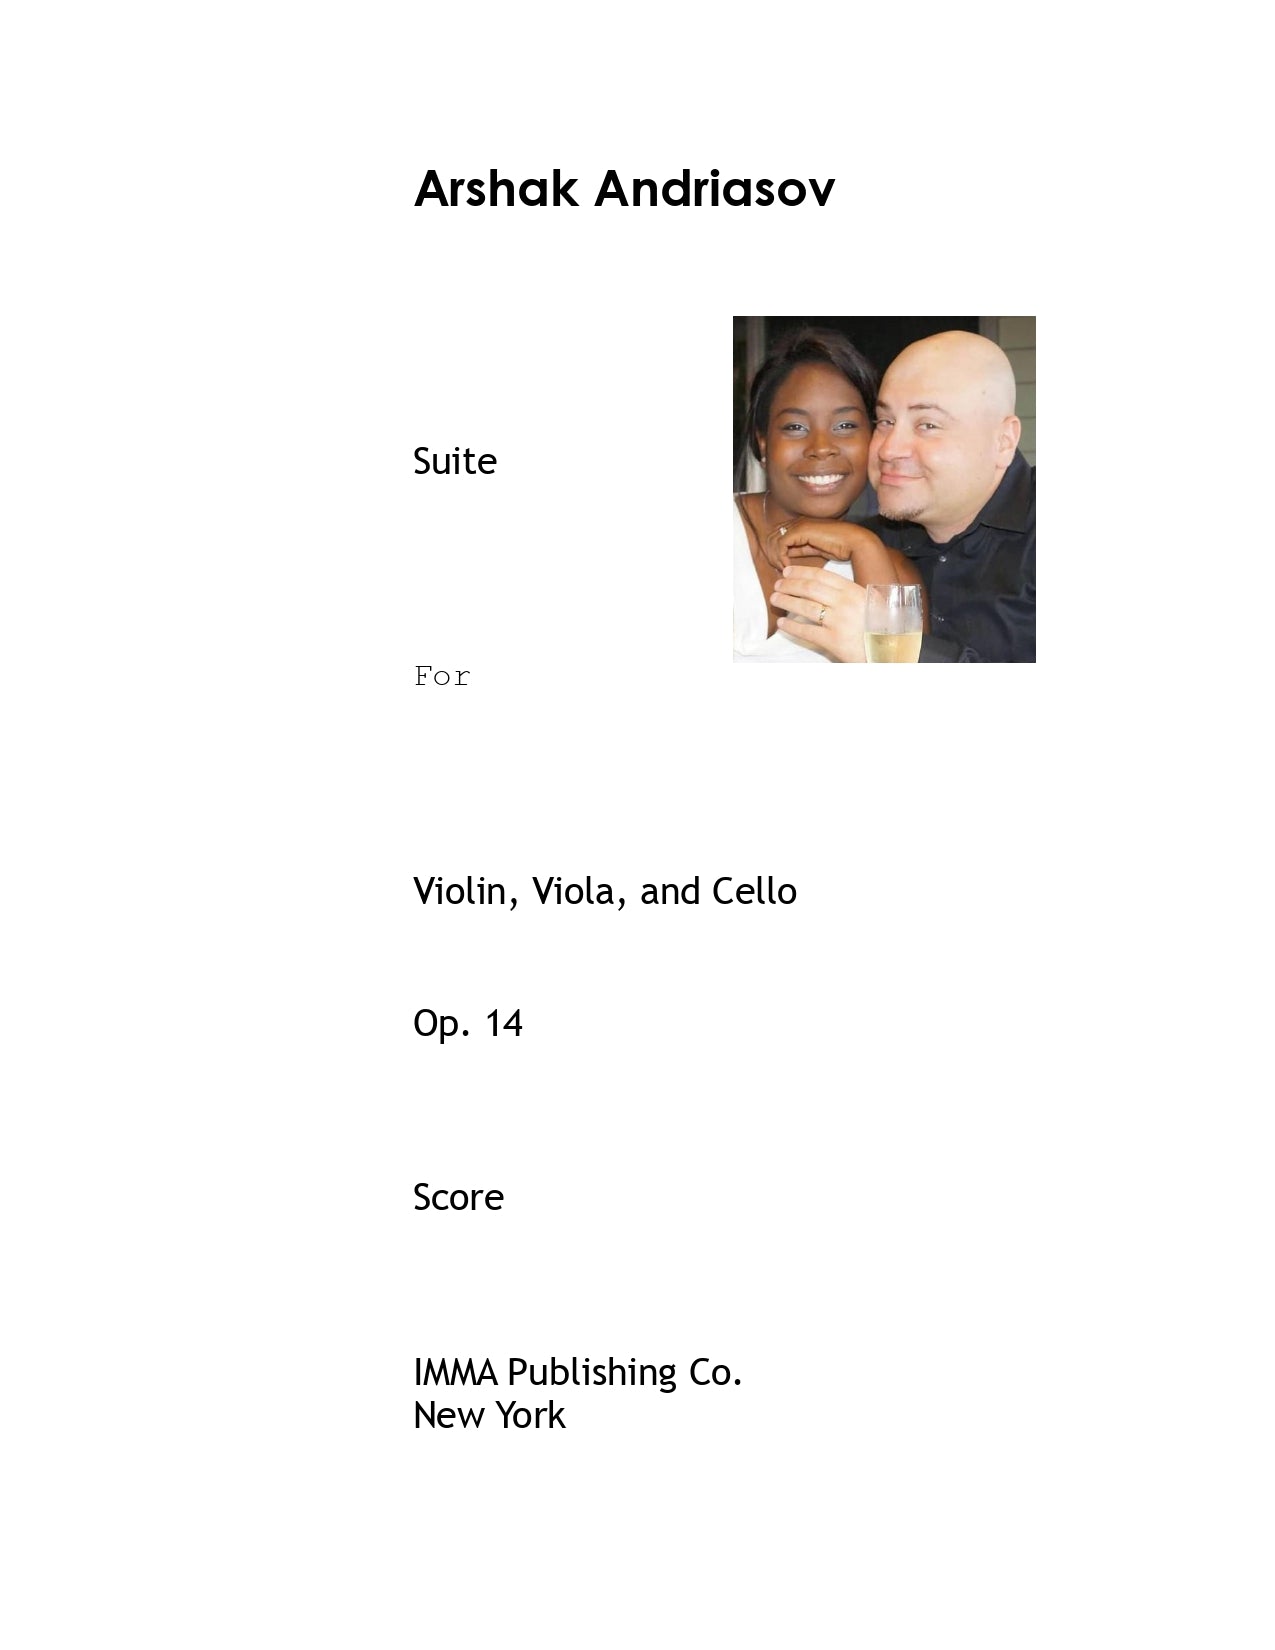 106. Arshak Andriasov: Suite, Op. 14 for Violin, Viola, and Cello (PDF)